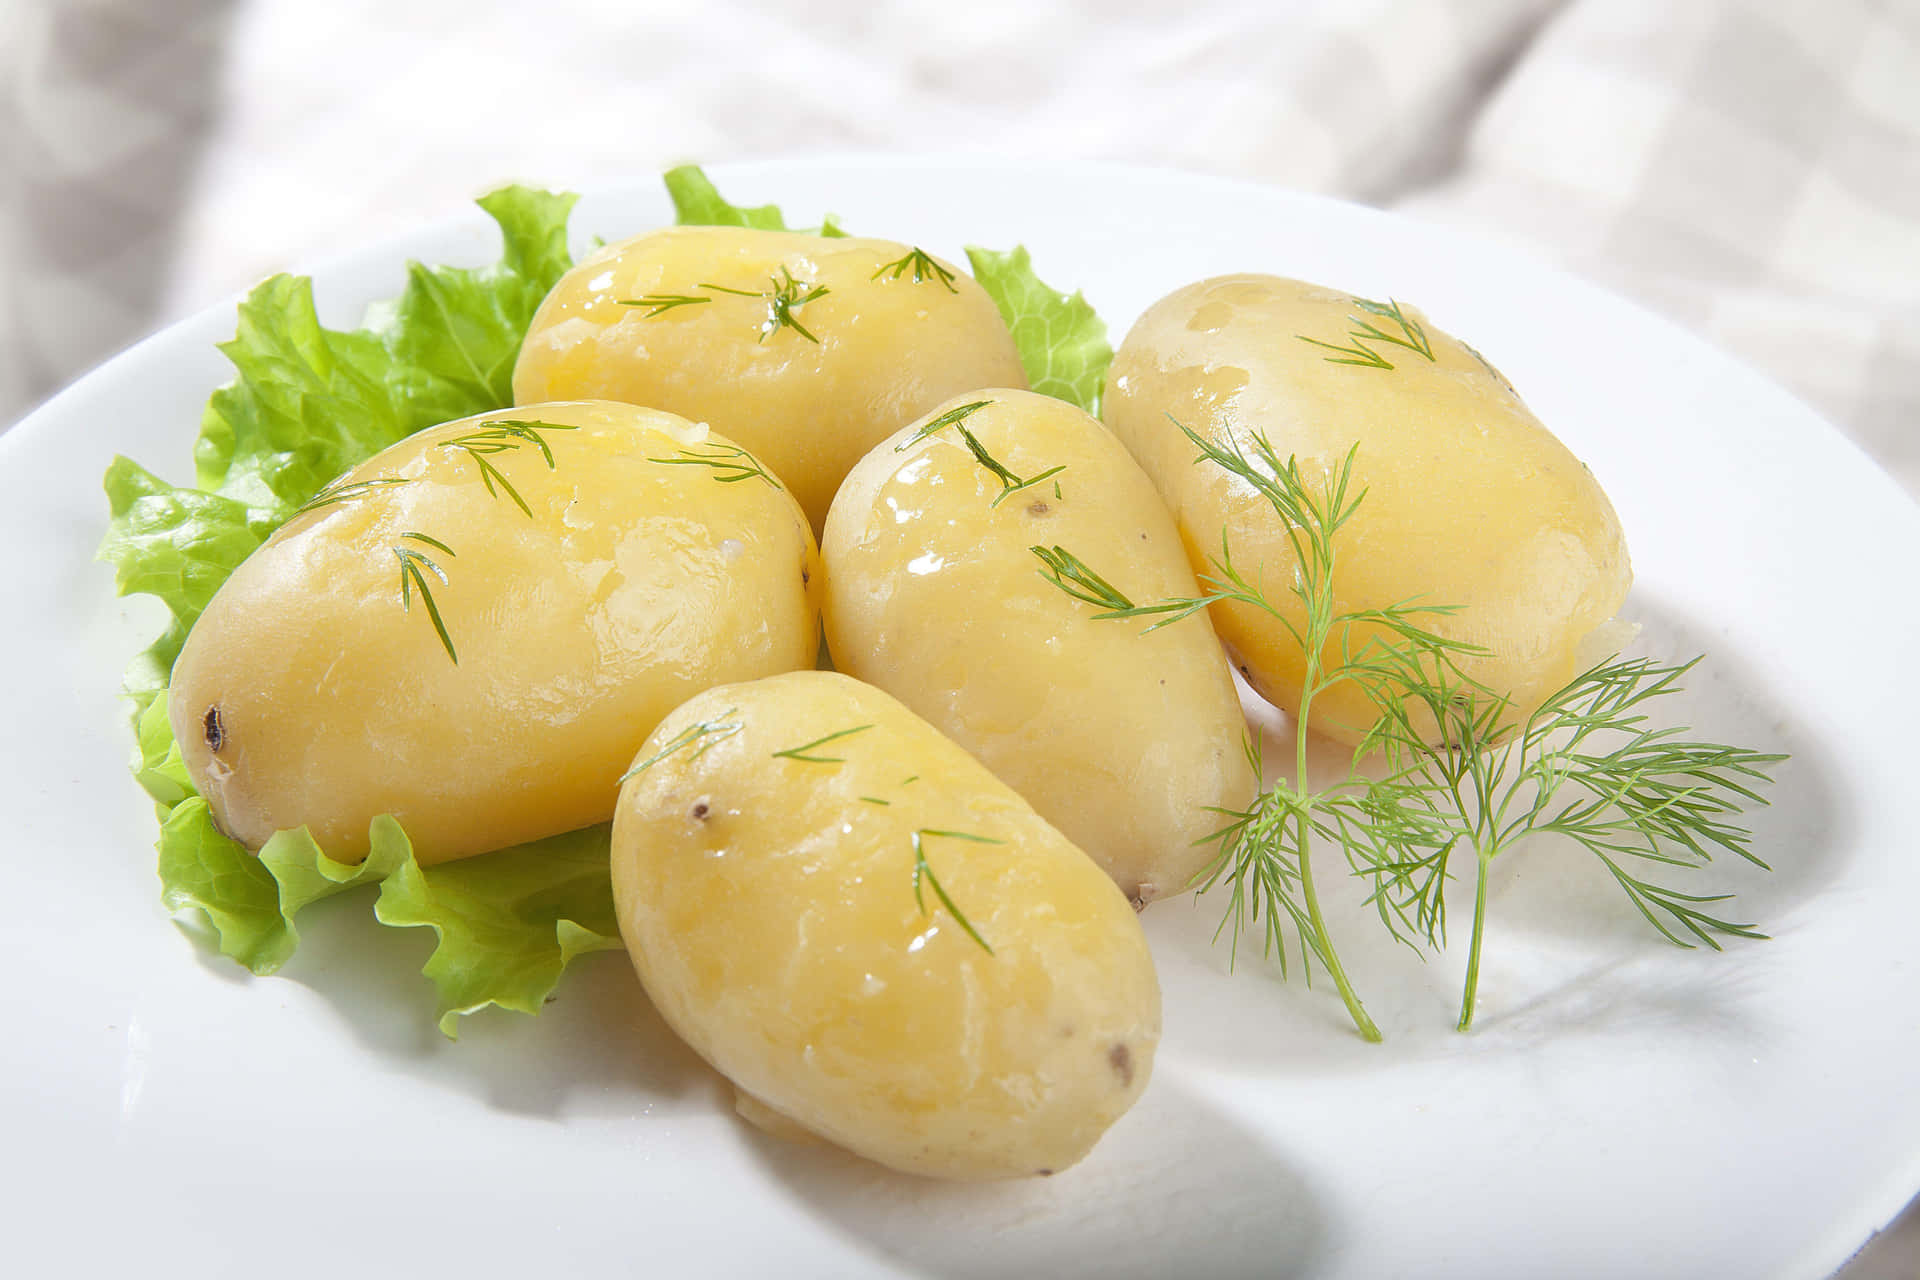 A bag of freshly-harvested potatoes